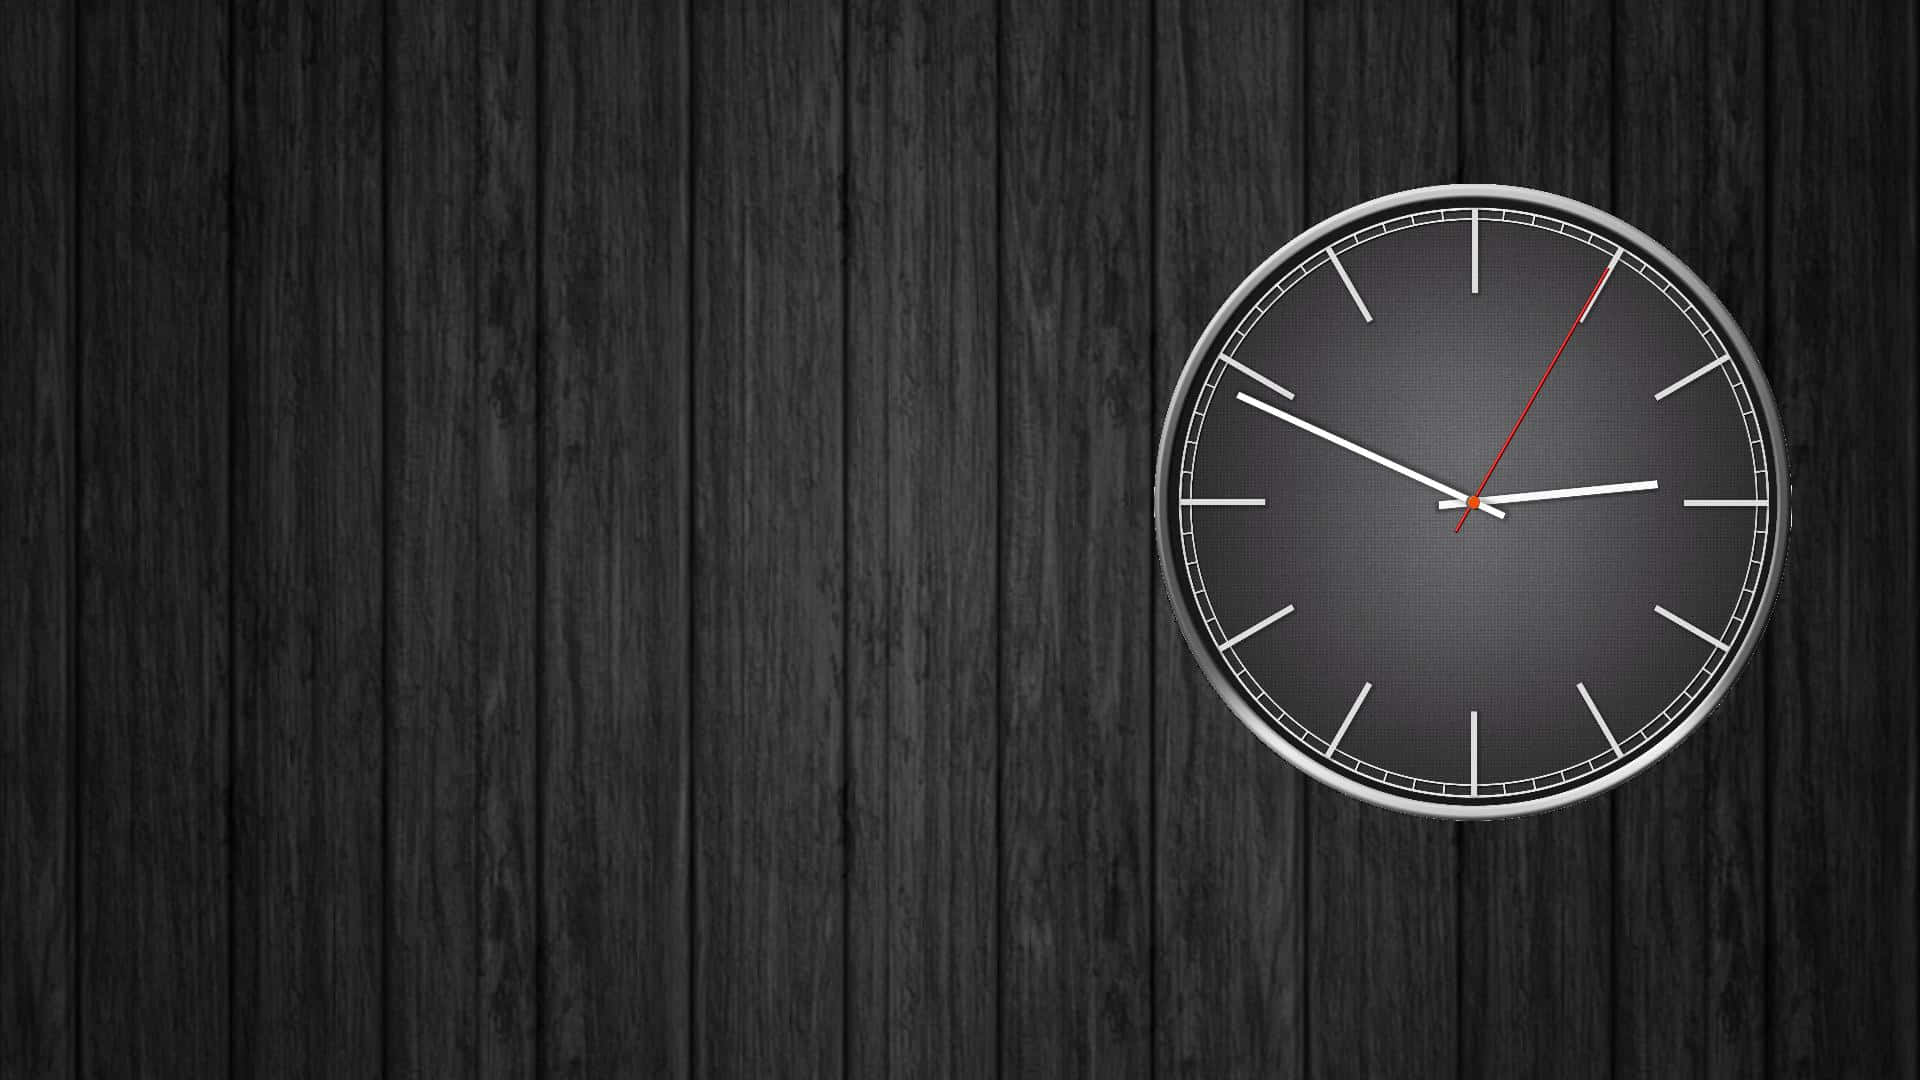 Classic Clocks For Your Home Decor